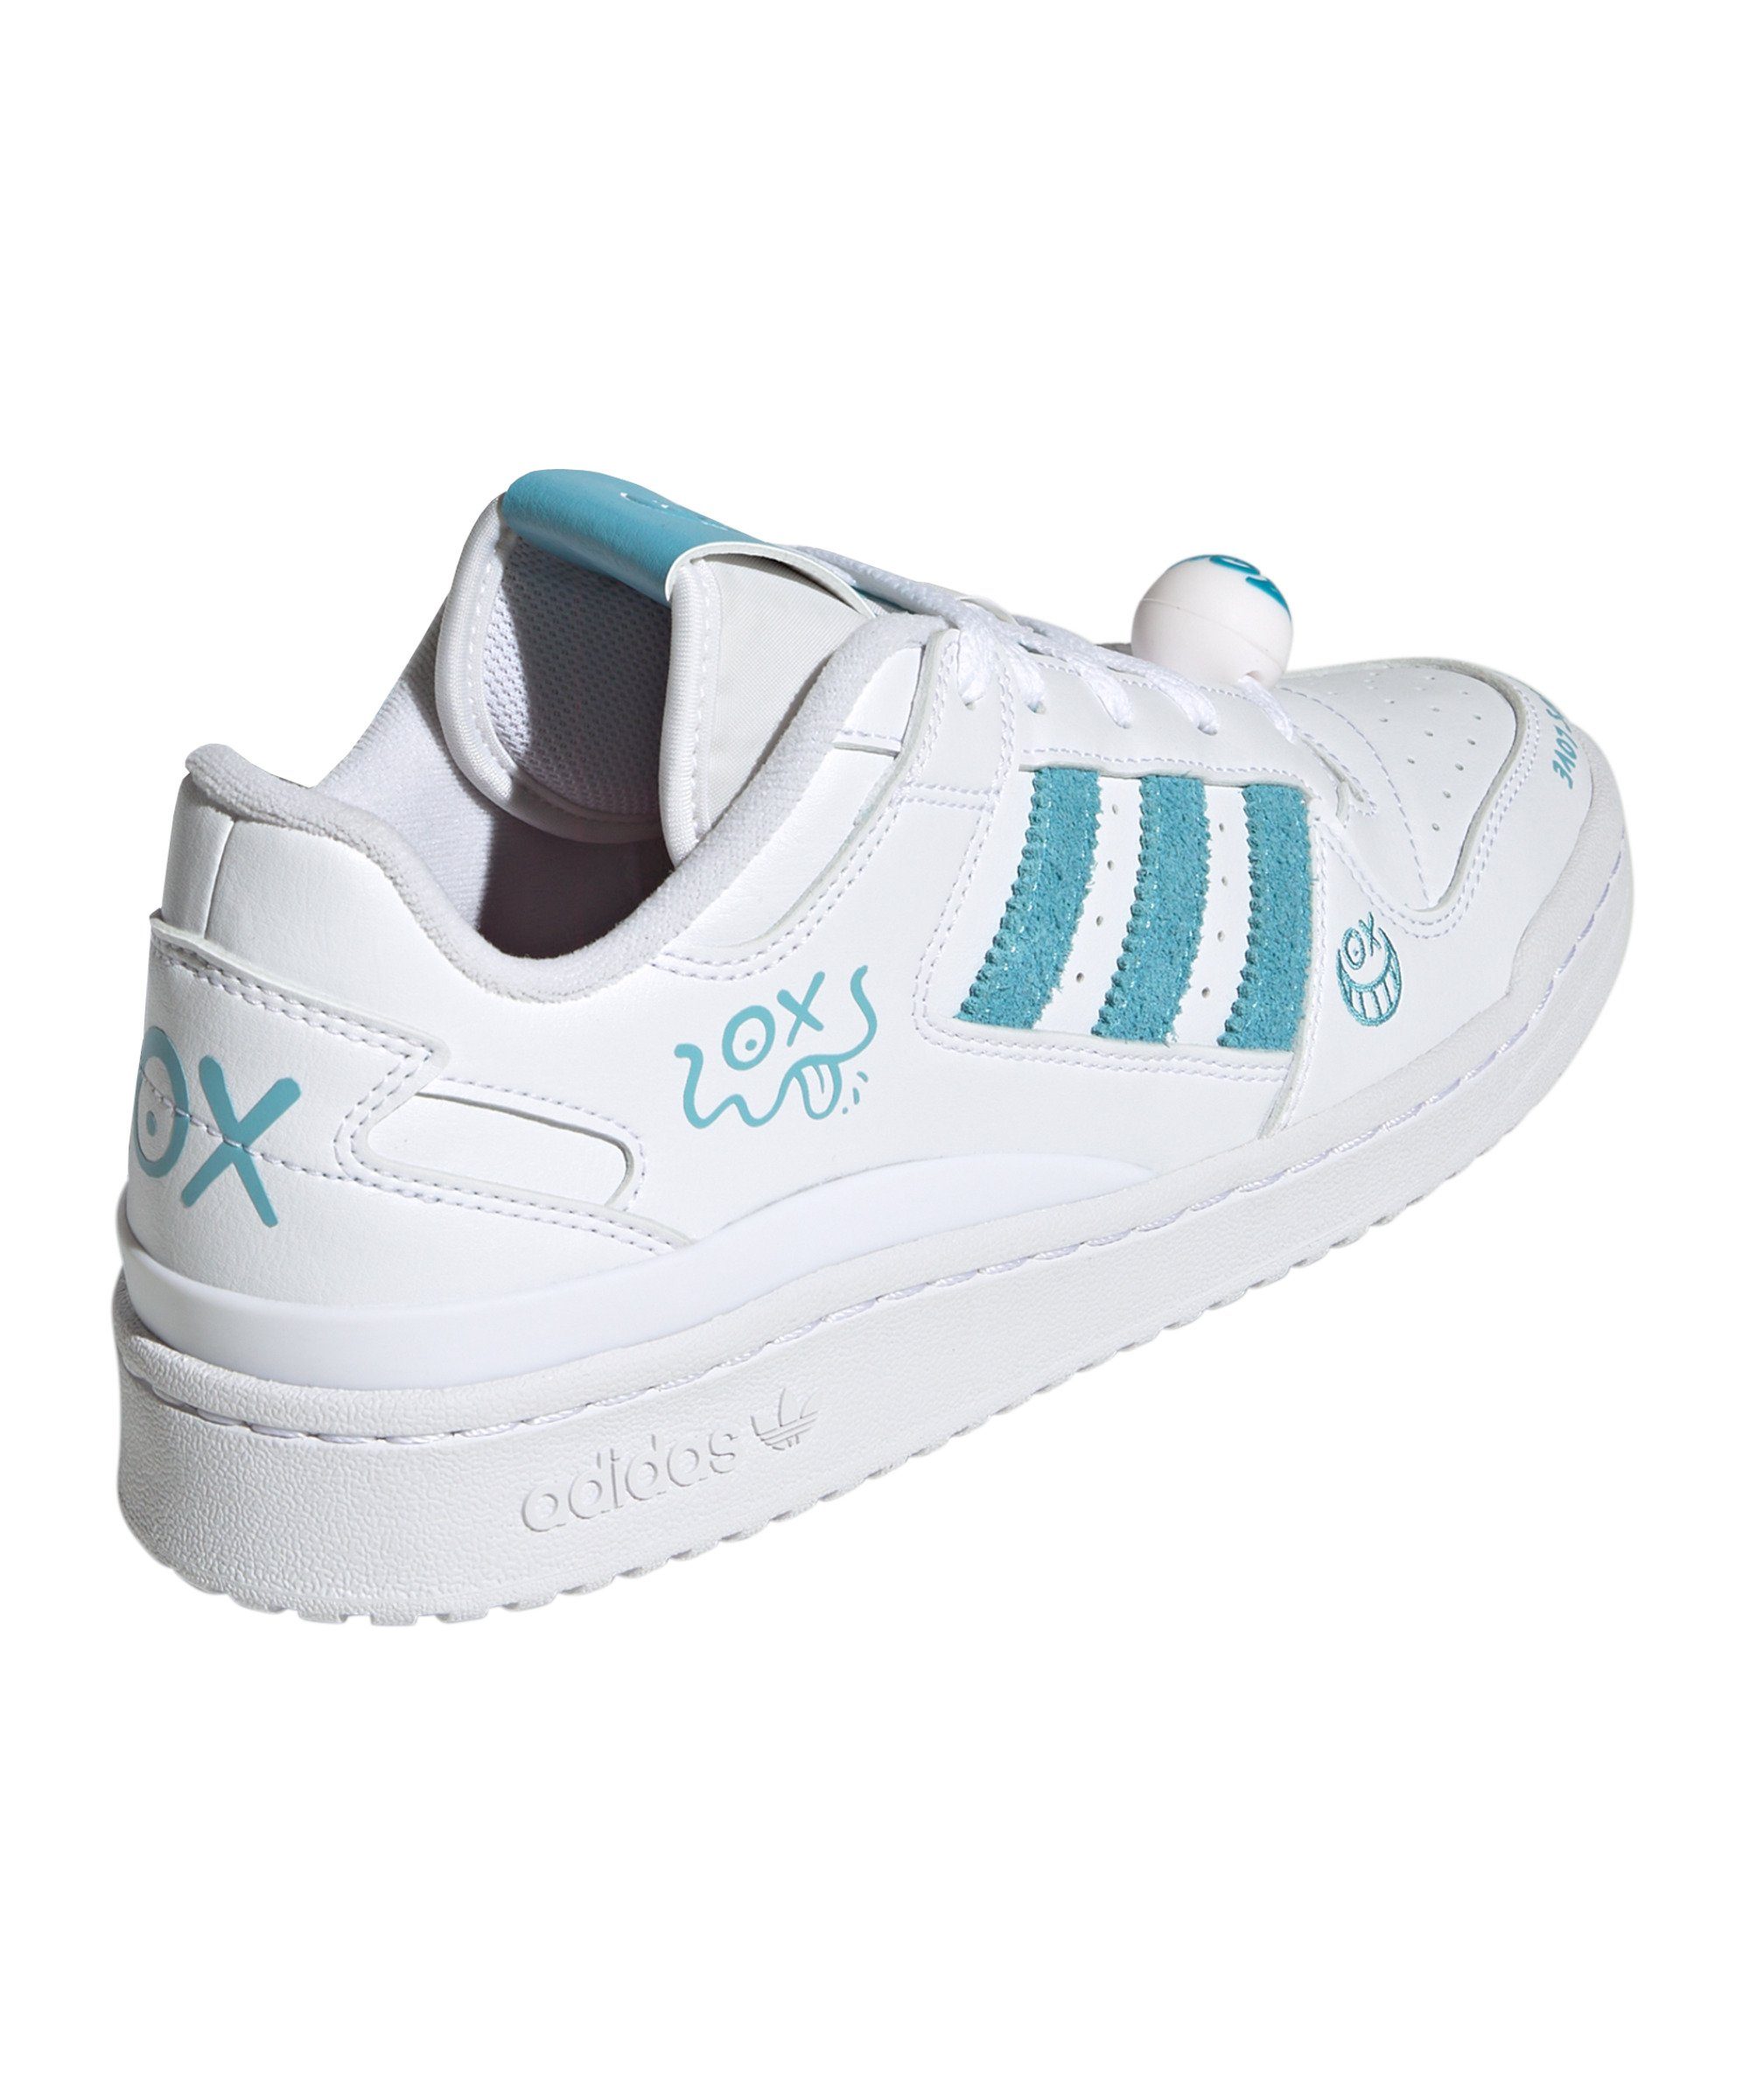 Low Sneaker Forum adidas CL Originals